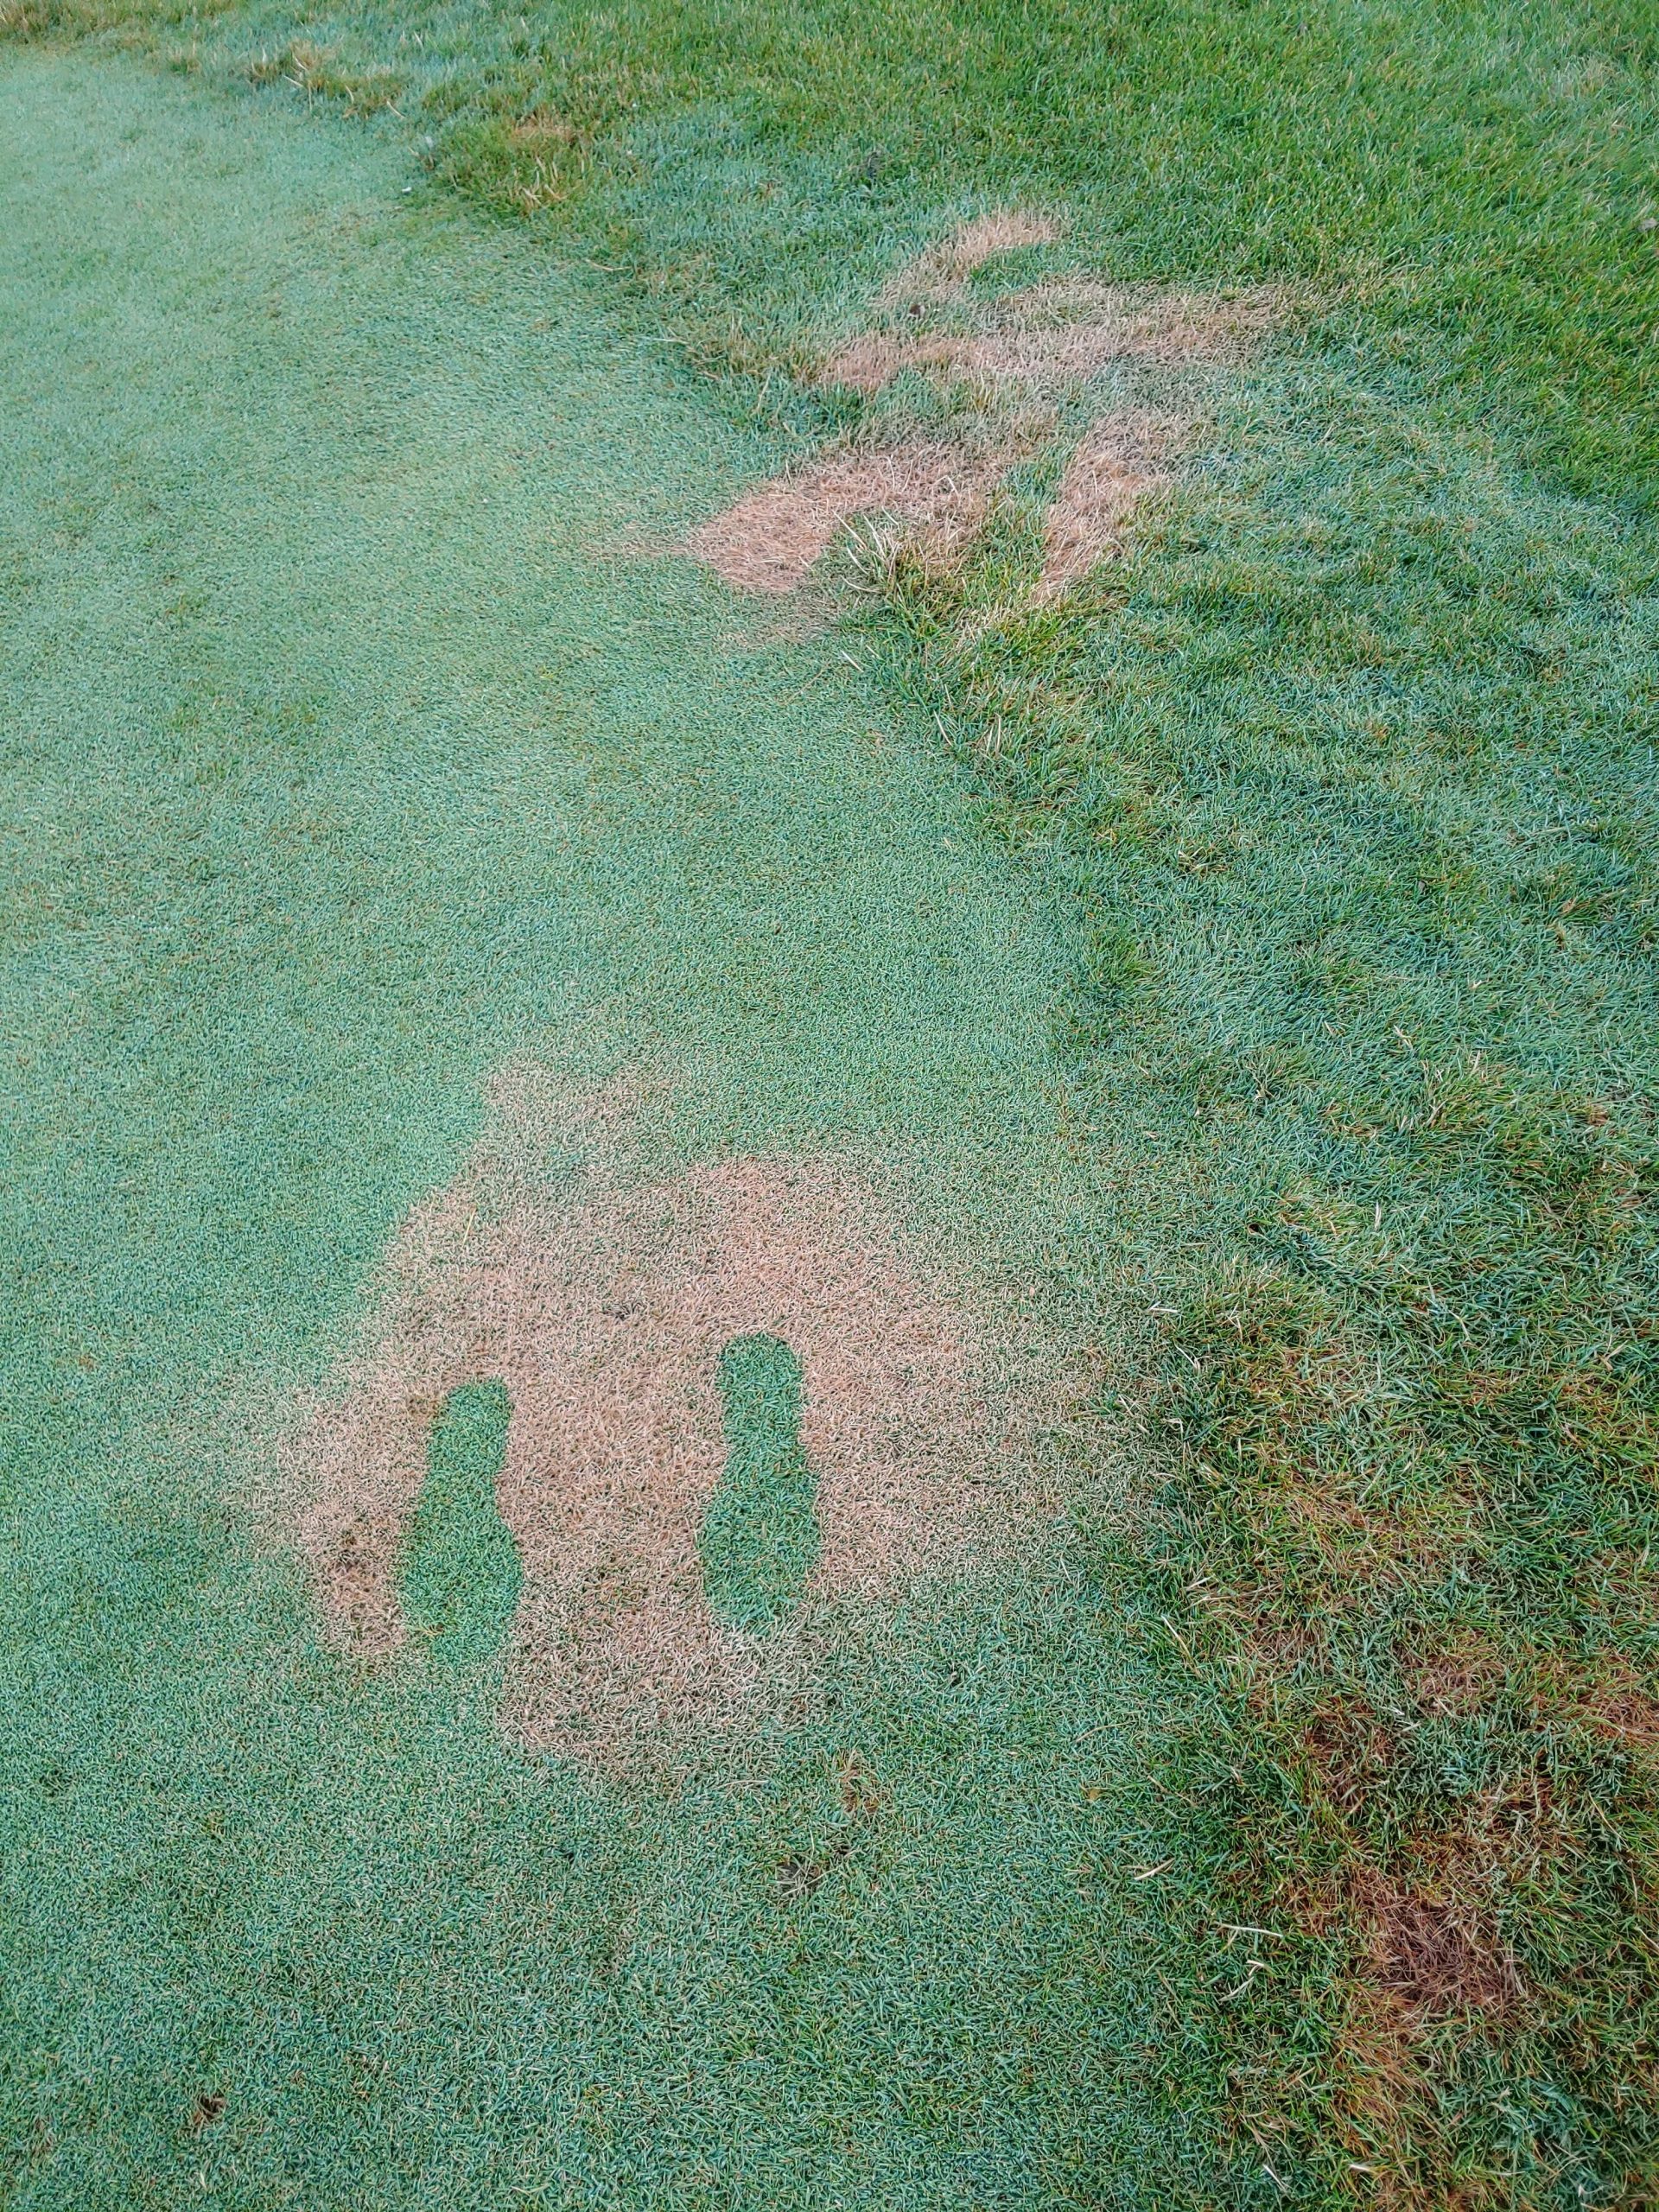 Image of turf burned by bug spray.